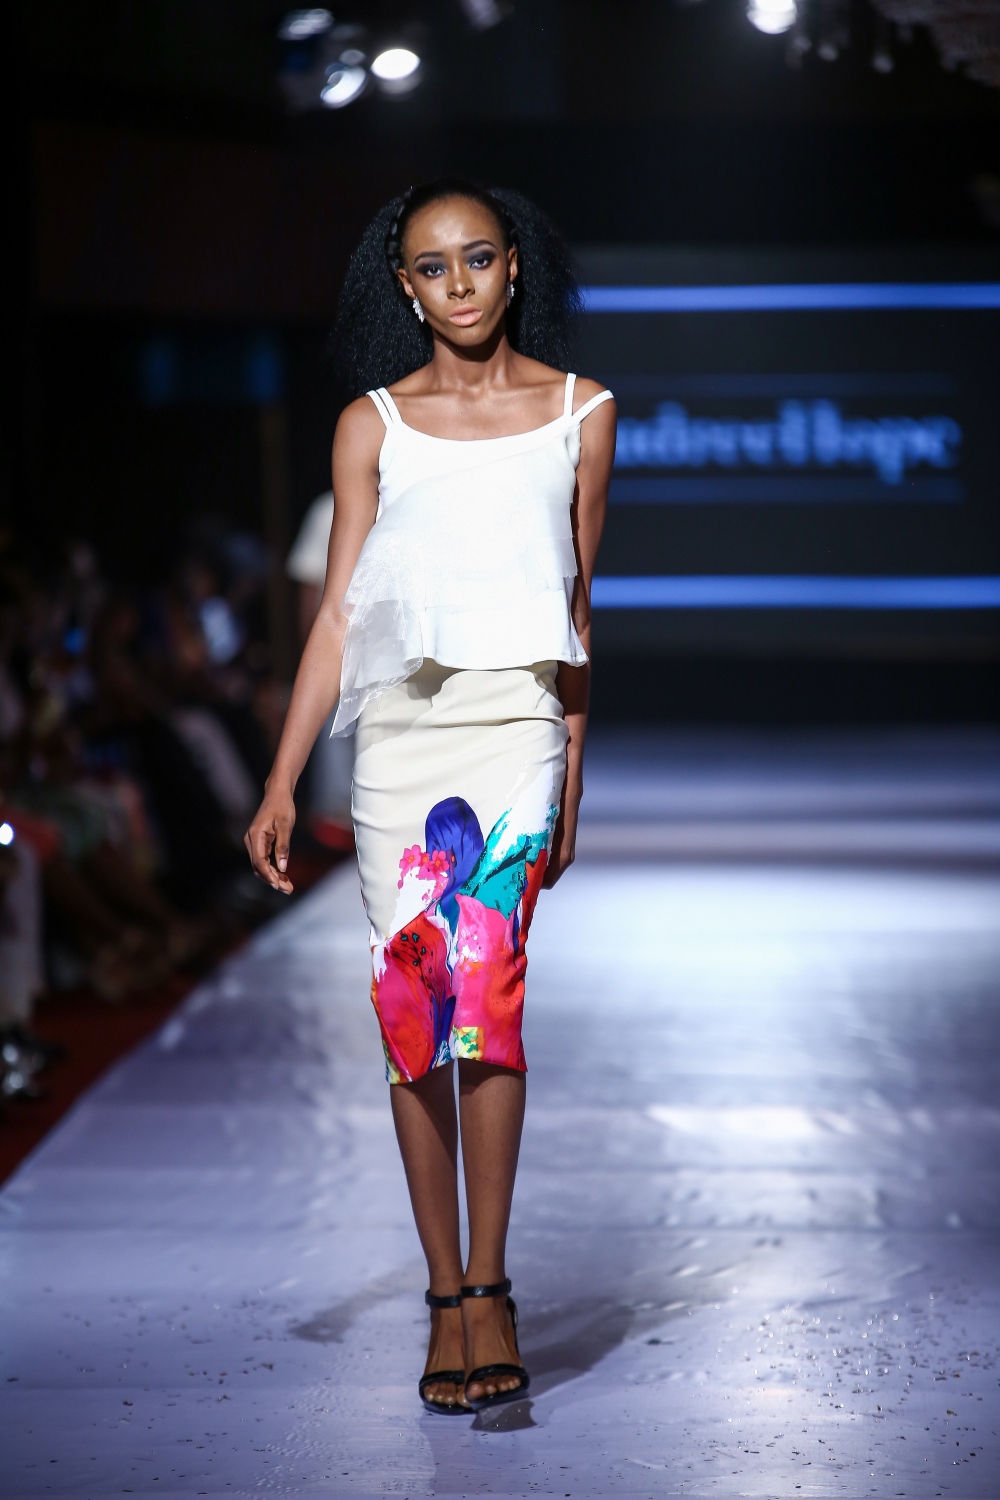 #AFWN17 | Africa Fashion Week Nigeria DAY 2: Audree Hope